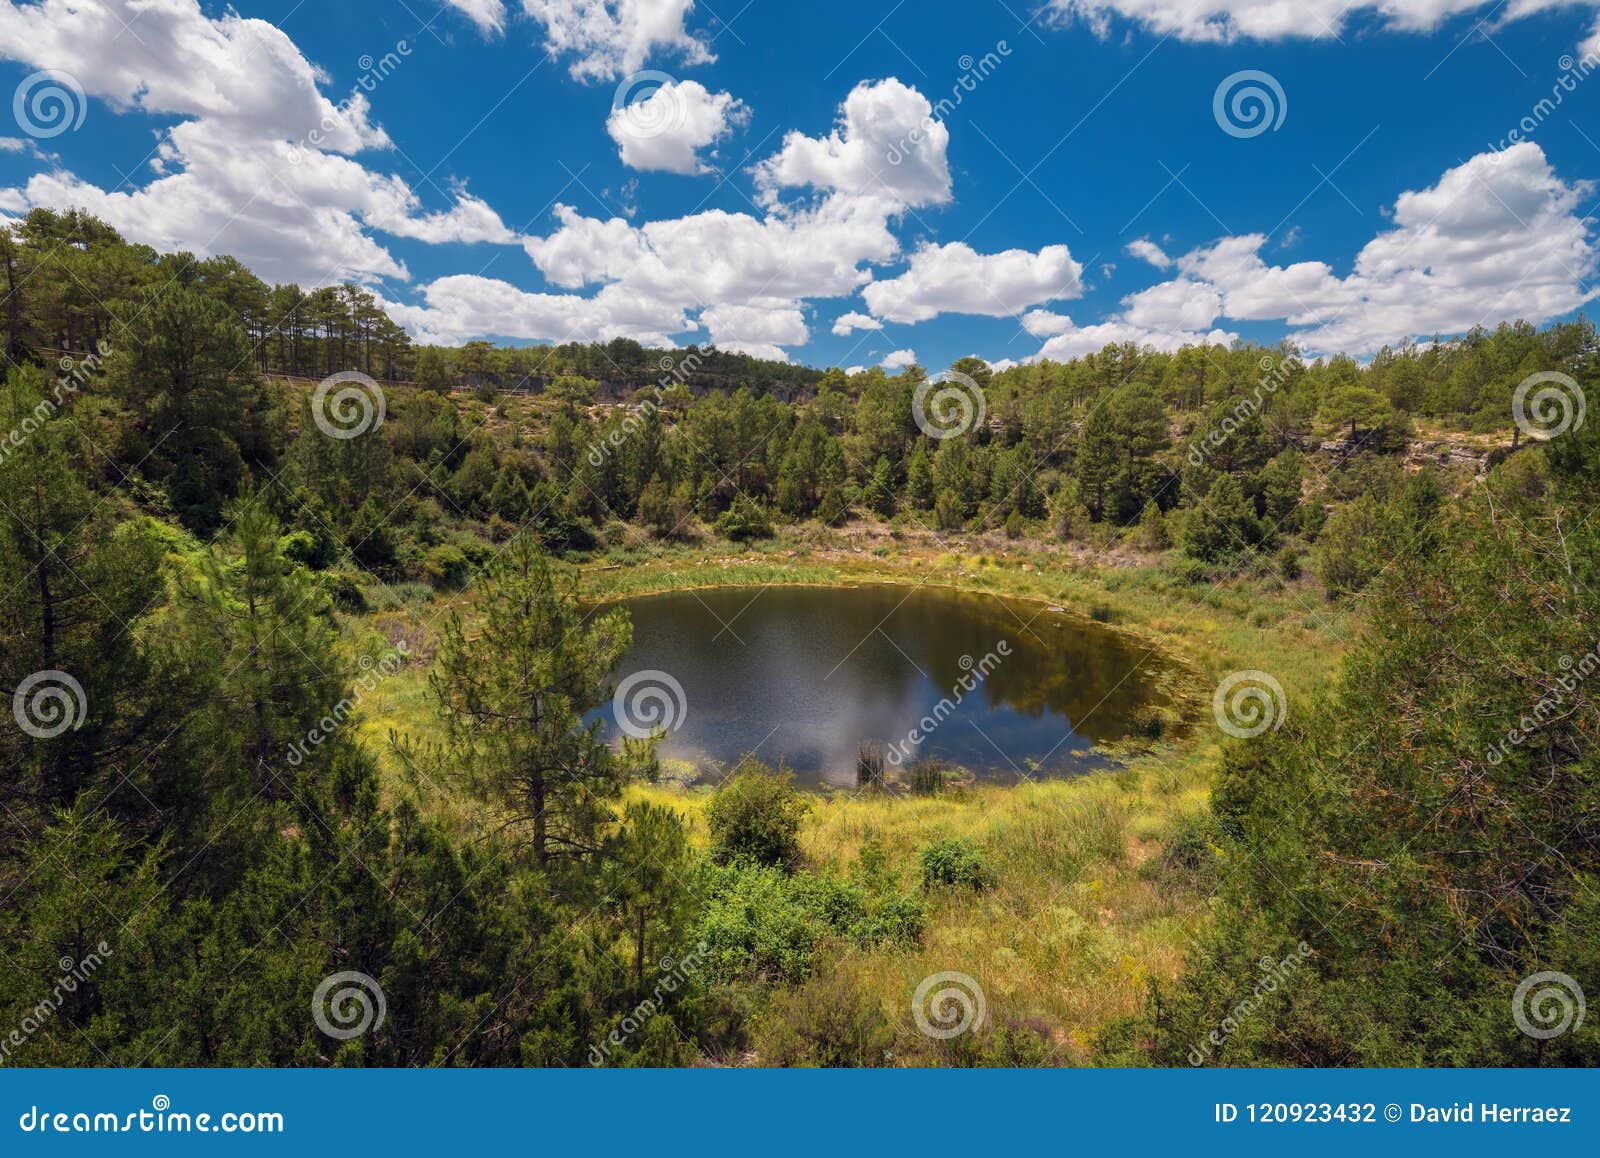 round lake geologic formation in cuenca province, castilla la mancha, spain.